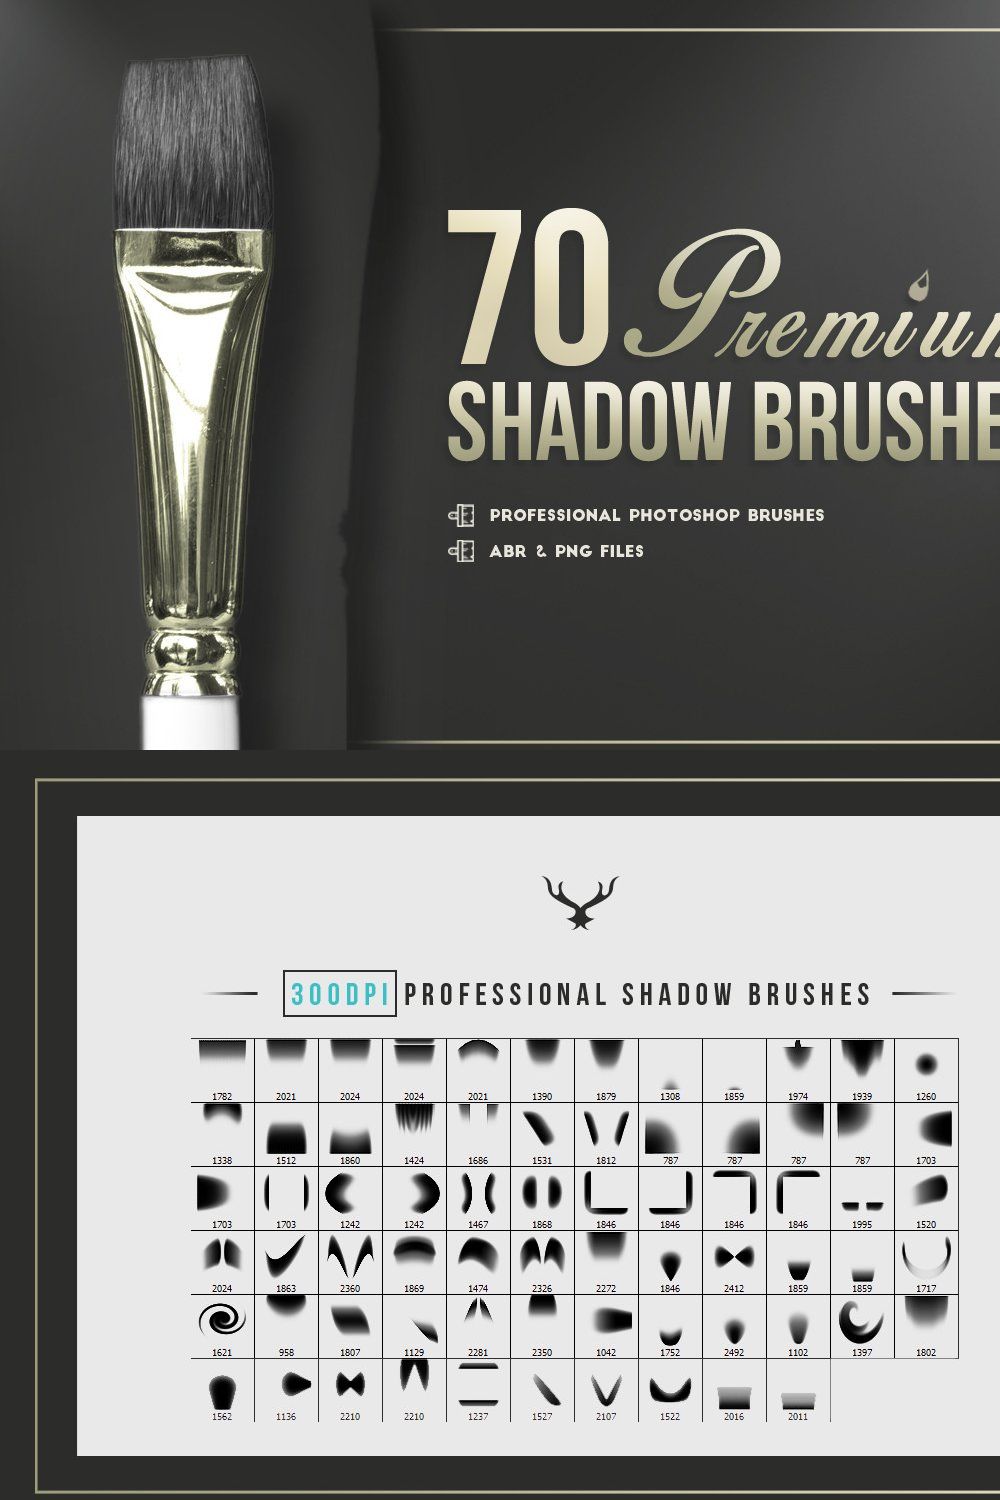 70 Premium Photoshop Shadows Brushes pinterest preview image.